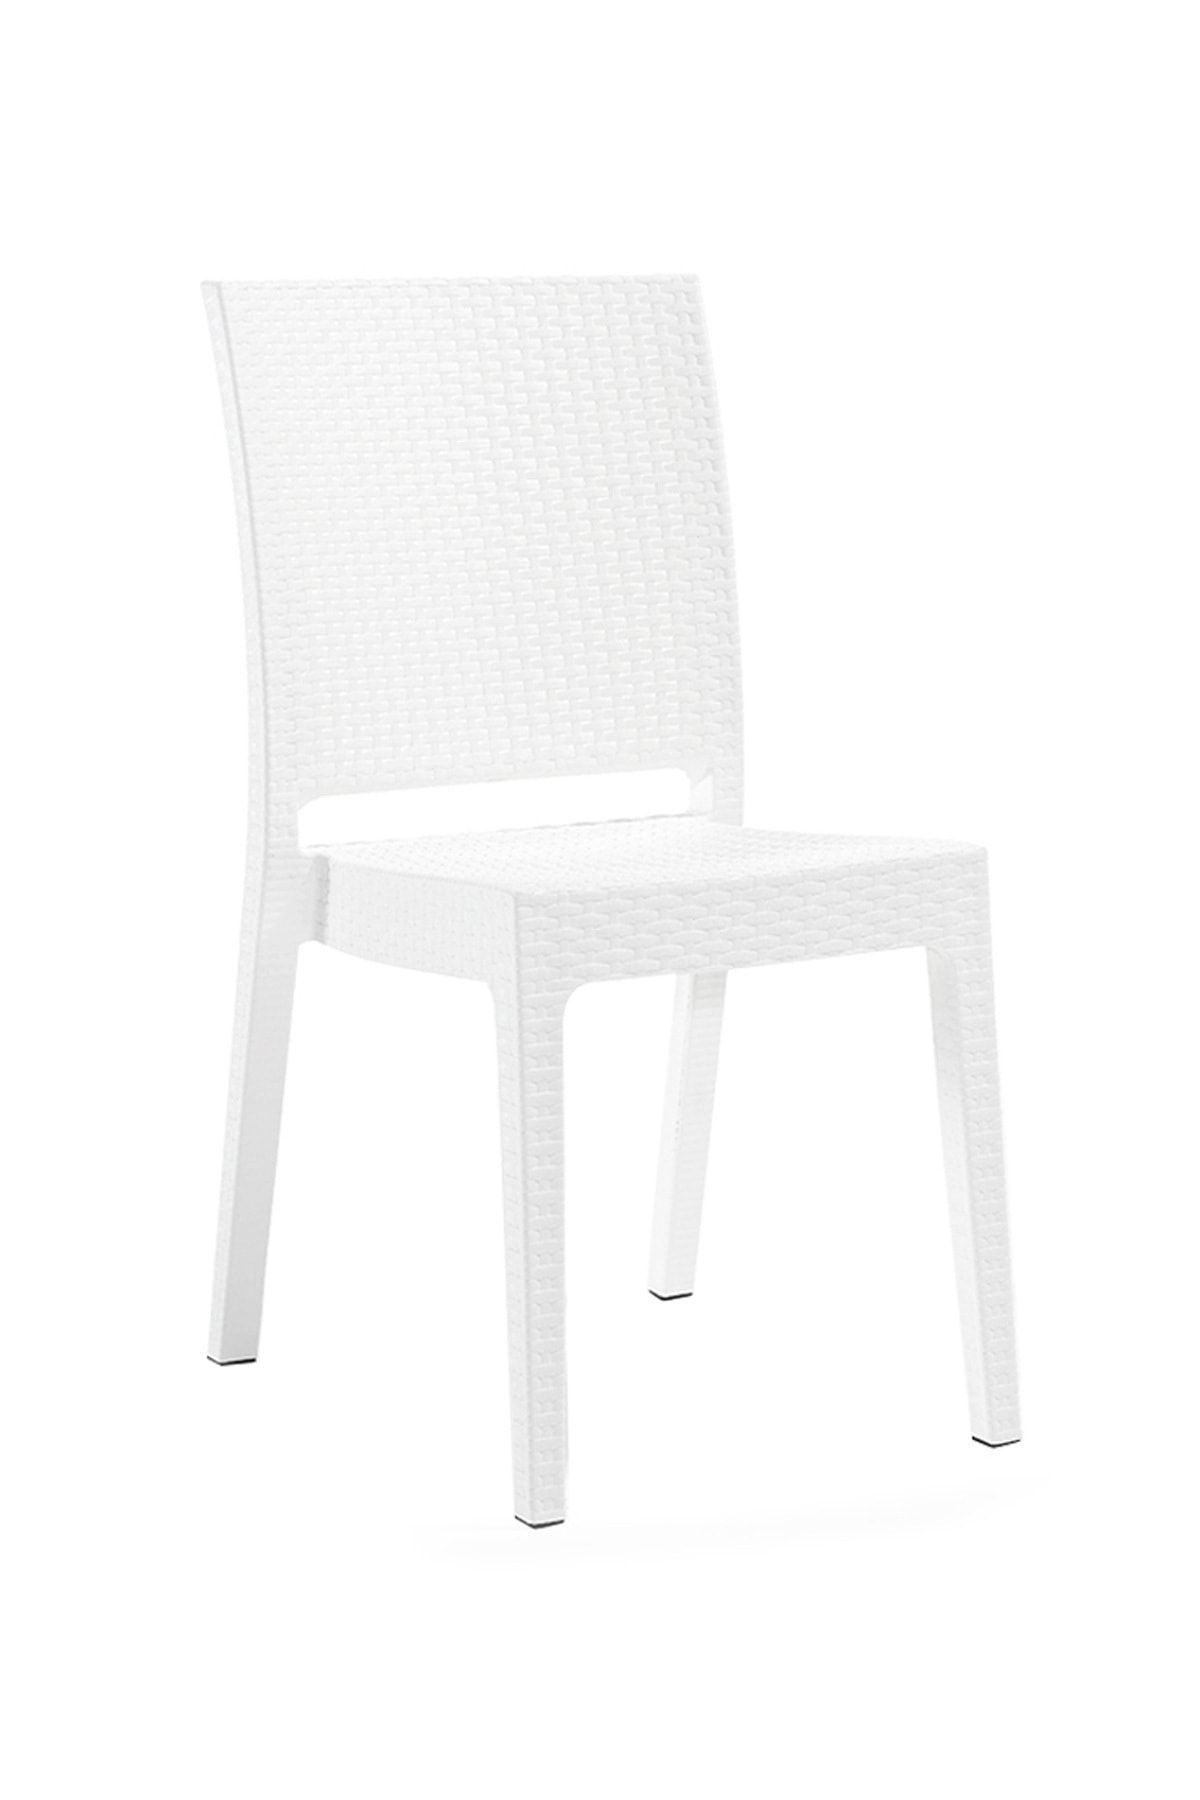 Novussi Nvs-023 Nice Rattan Sandalye Beyaz